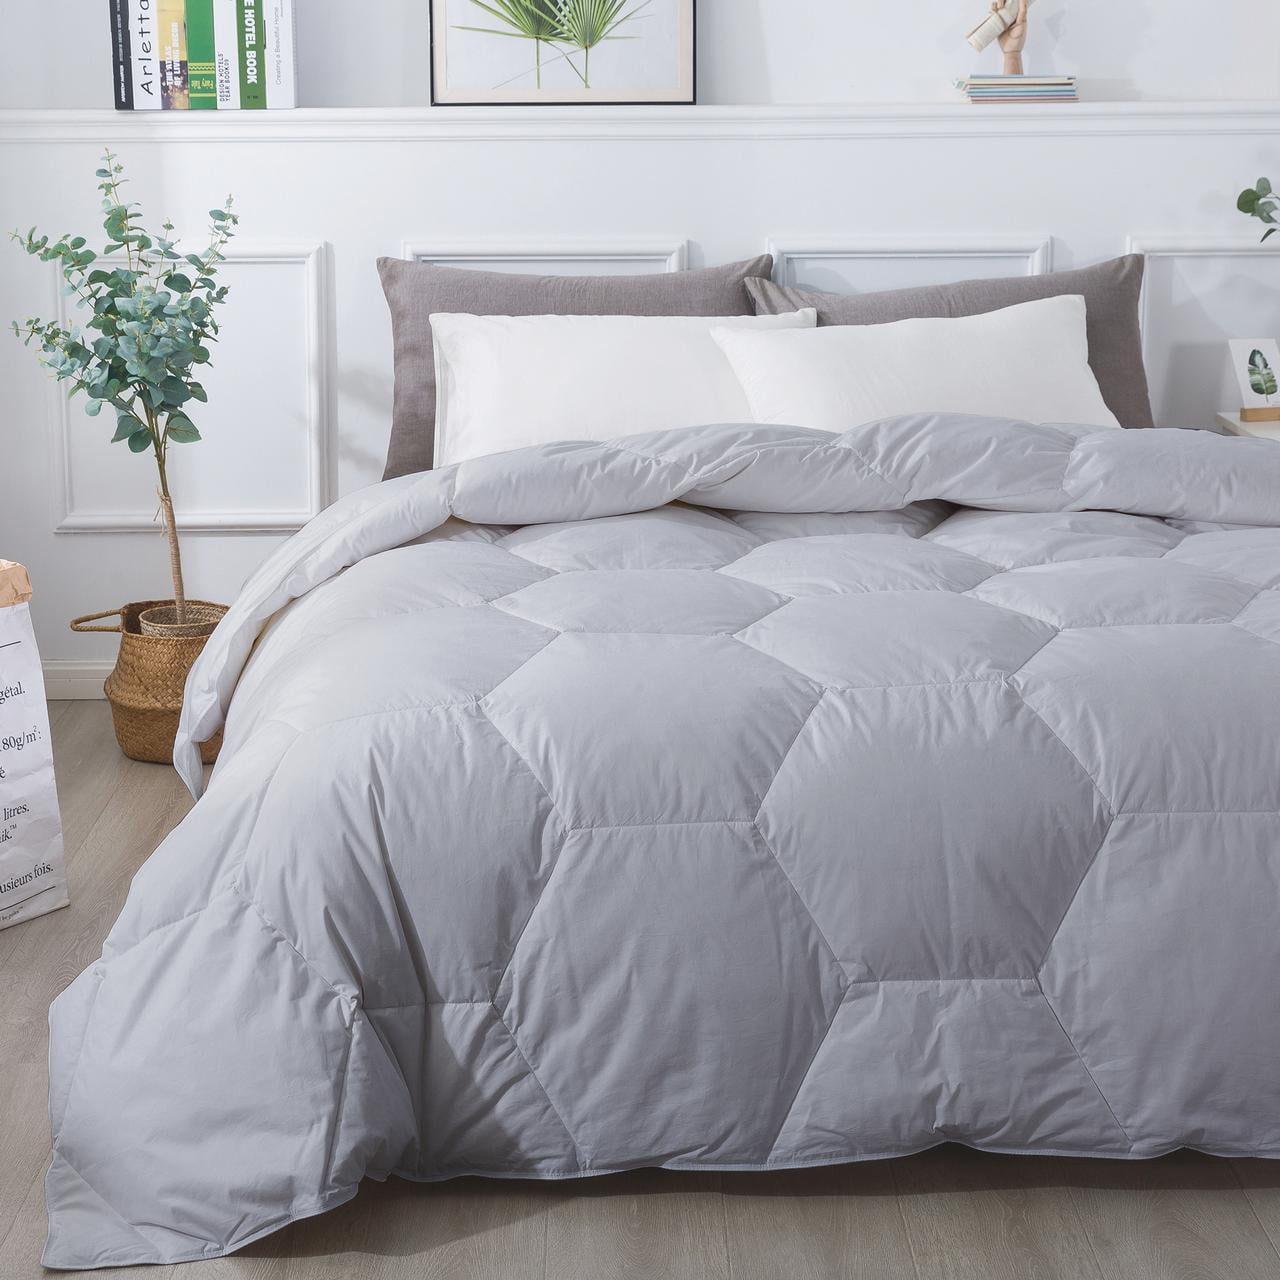 Details about   Down Alternative Comforter Duvet Insert Quilted Comforter w/ Corner Tabs Bedding 